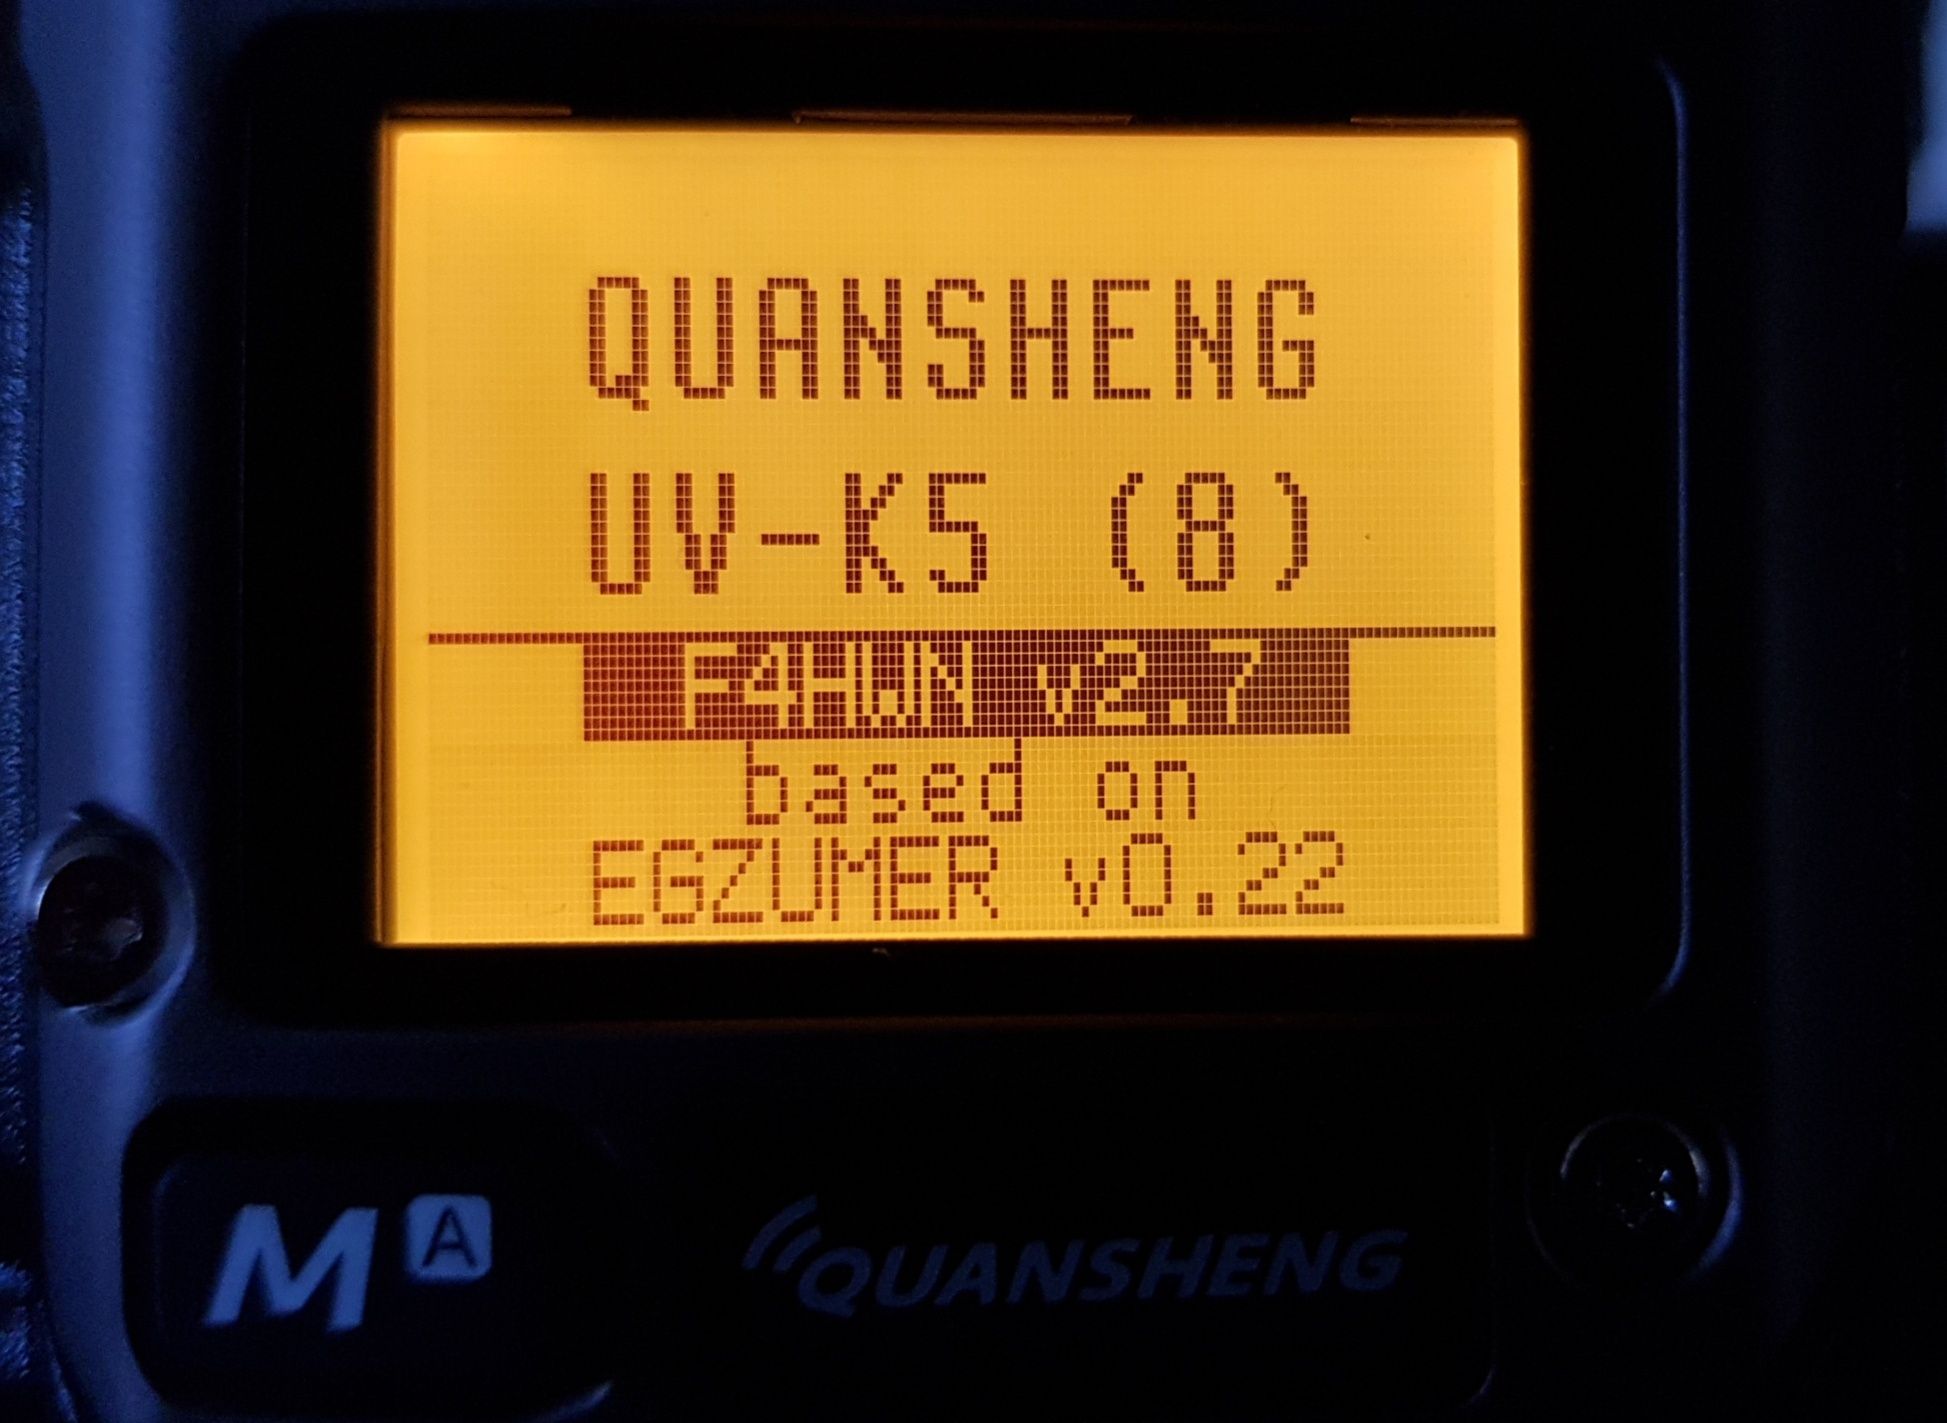 Акция на рации Quansheng UV-K5(8) стандарт, или с мод.прошивкой